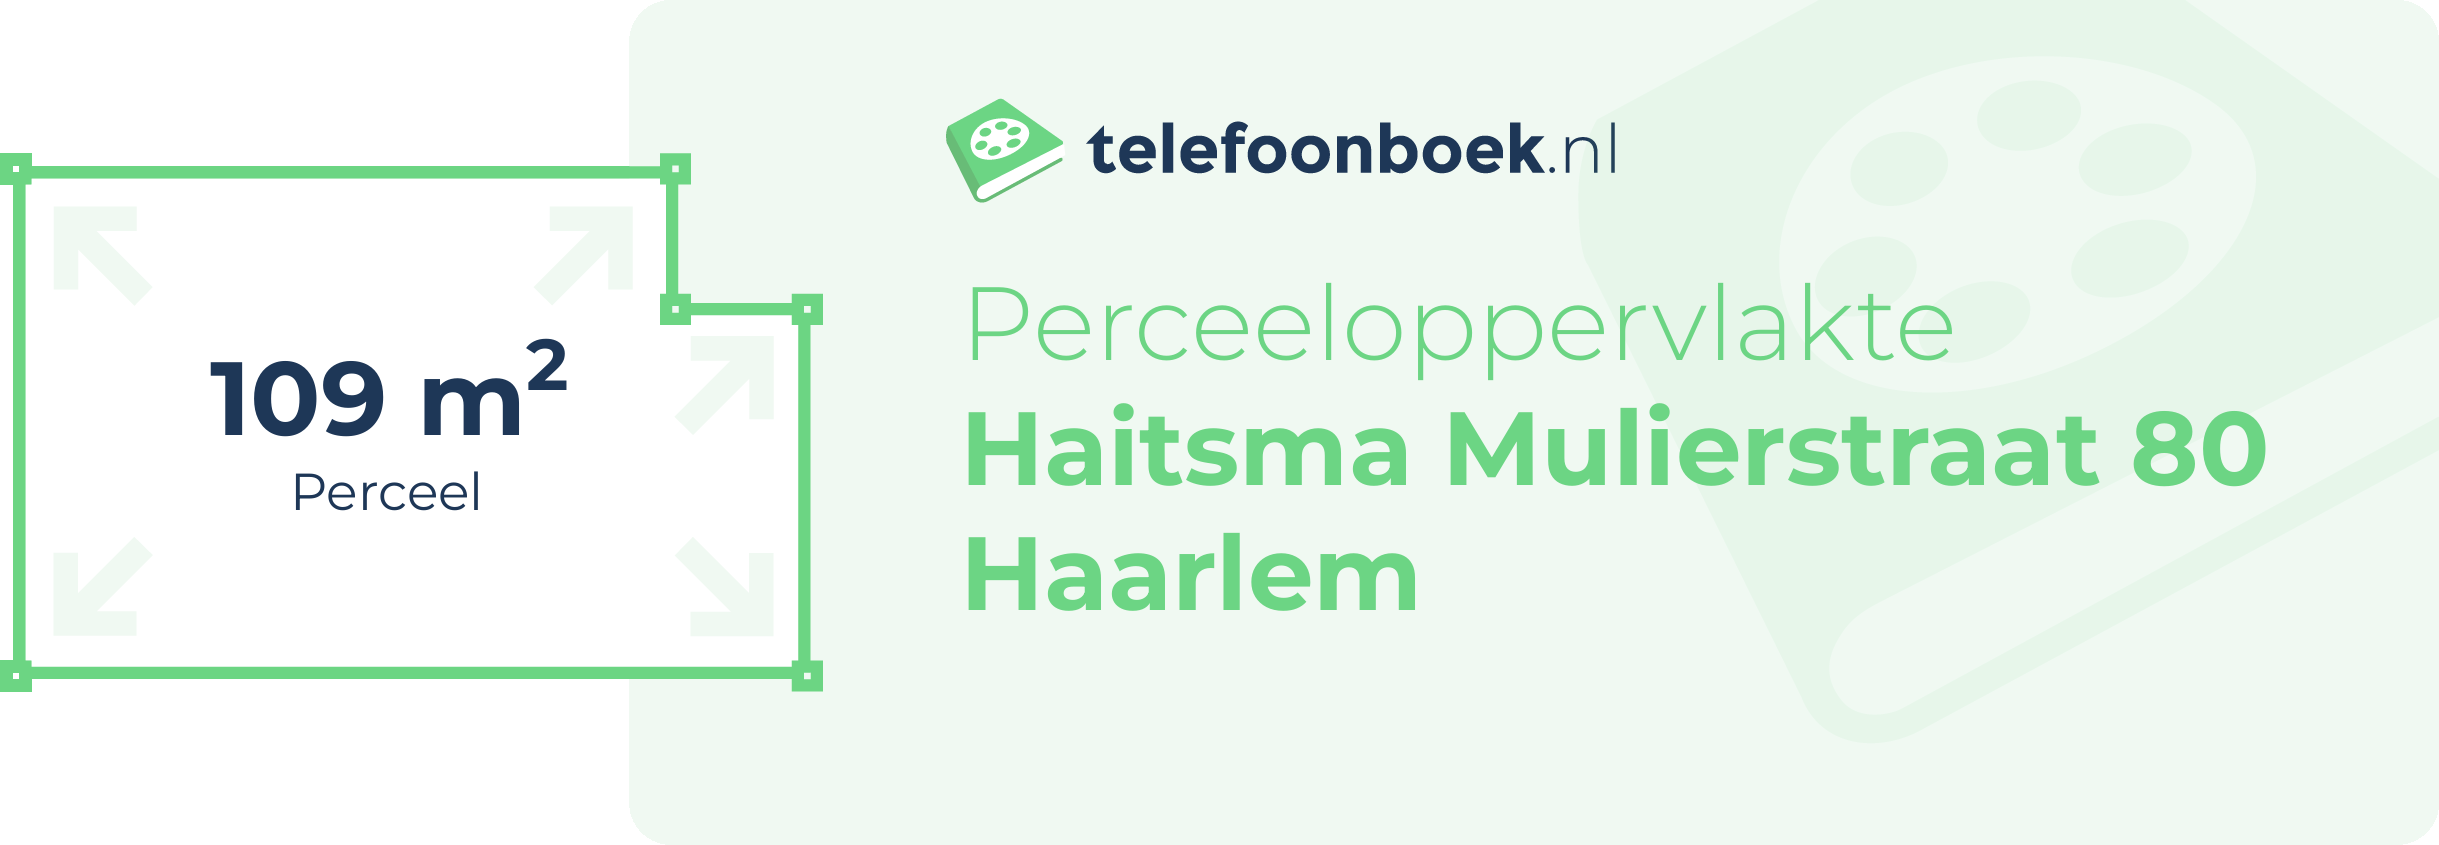 Perceeloppervlakte Haitsma Mulierstraat 80 Haarlem